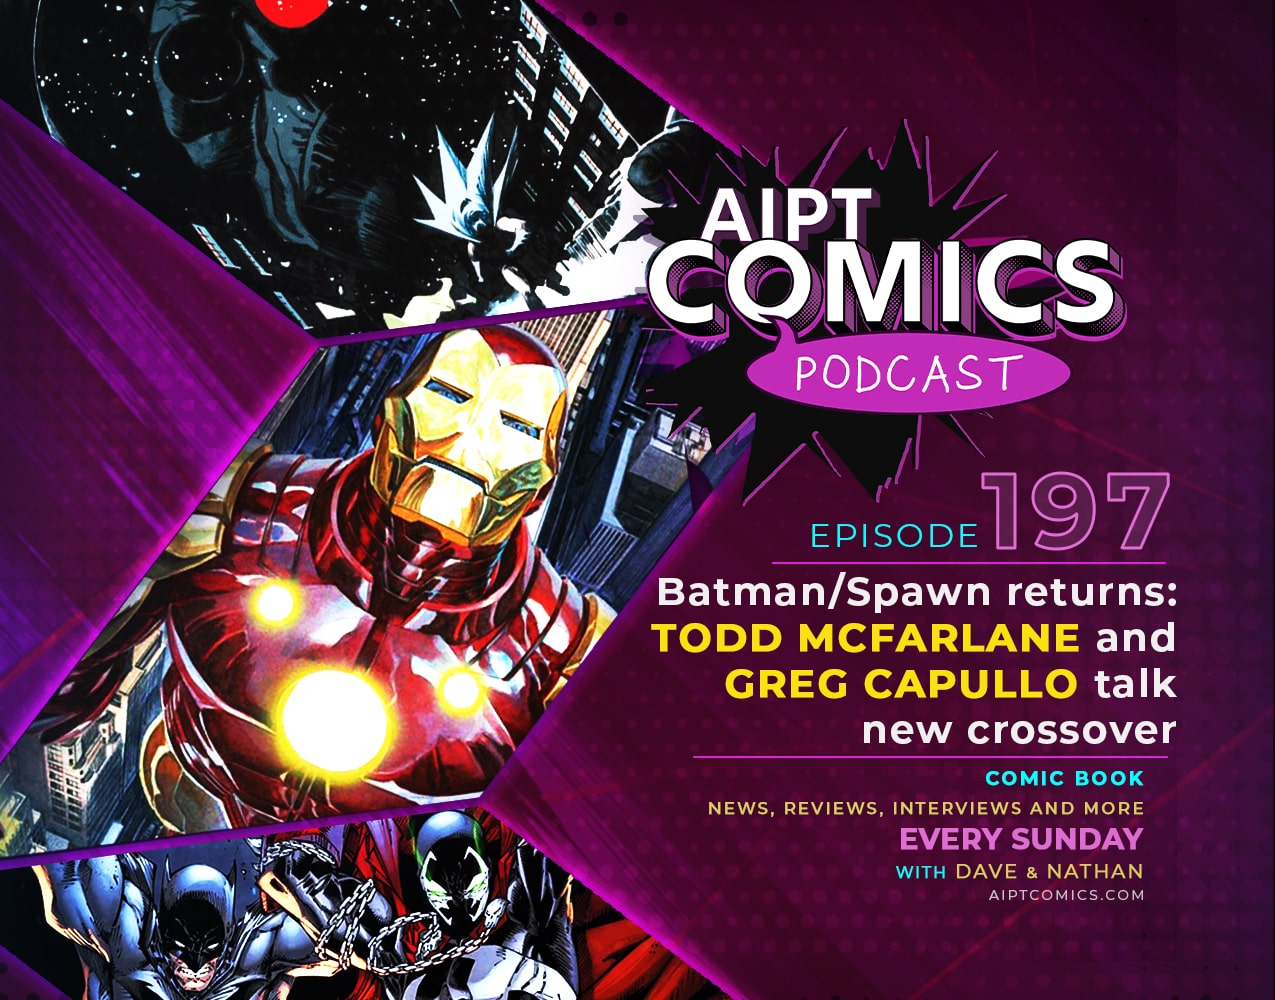 AIPT Comics Podcast episode 197: Batman/Spawn returns: Todd McFarlane and Greg Capullo talk new crossover